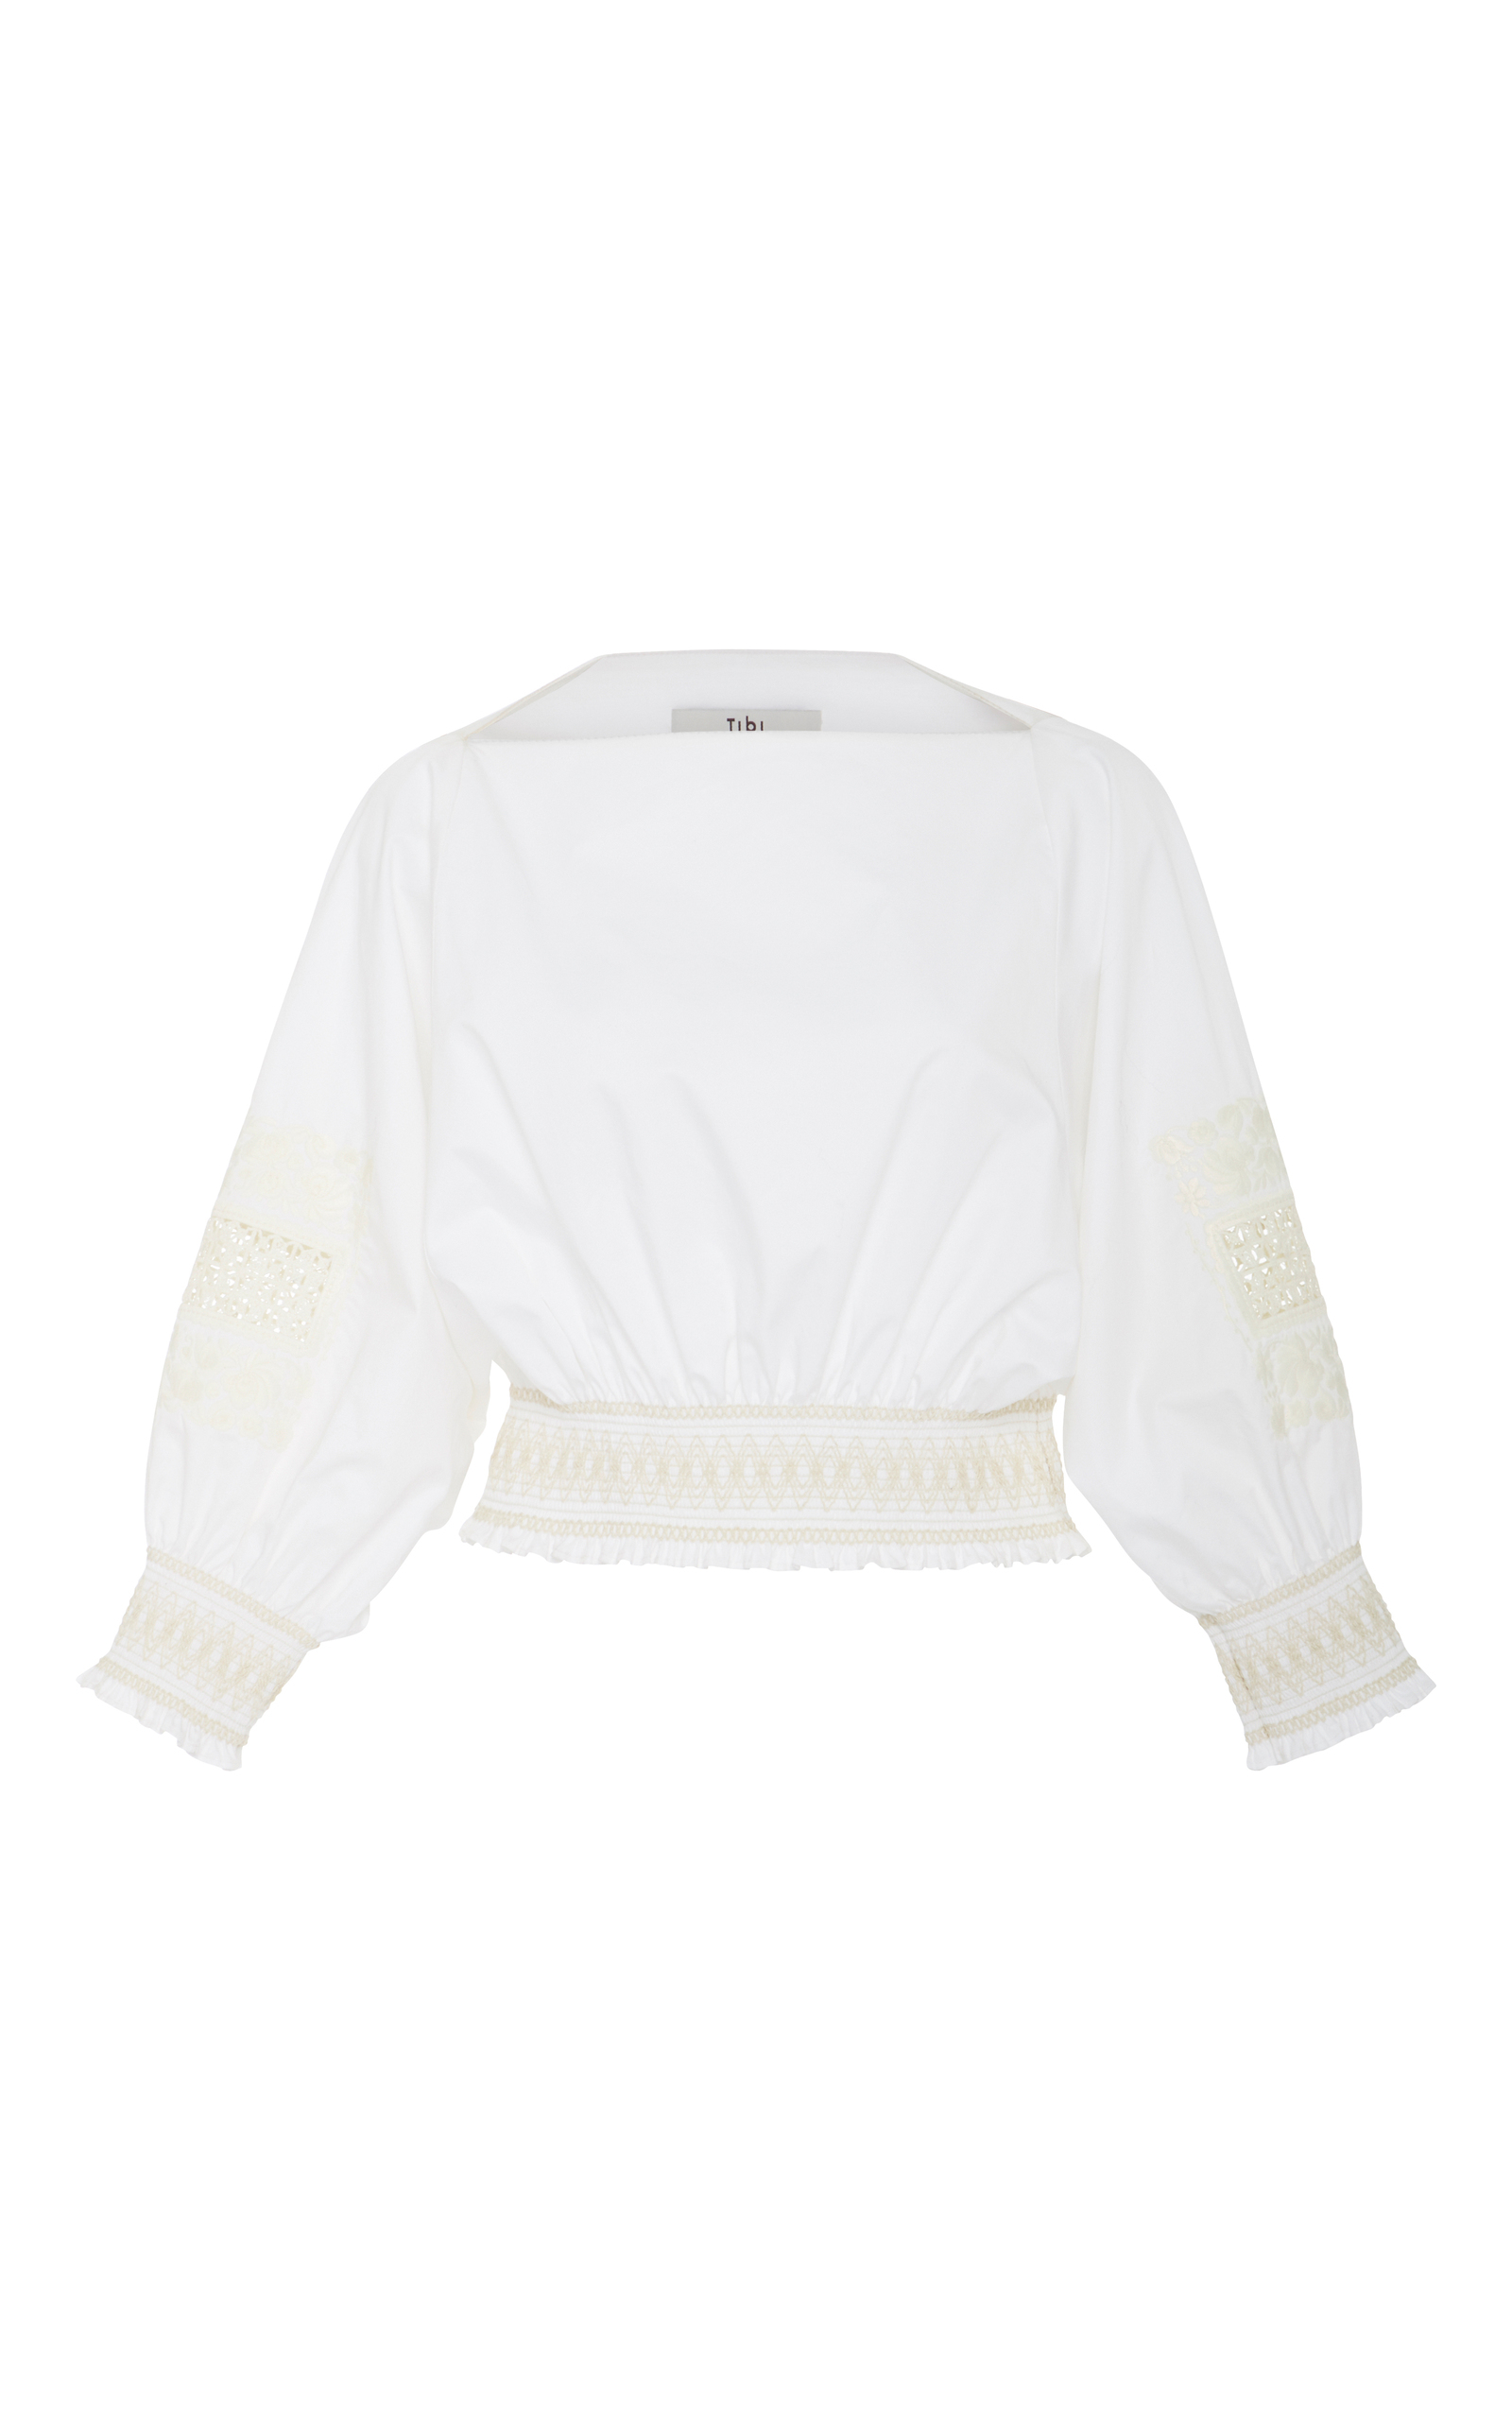 Tibi Embroidered Cotton Top In White | ModeSens